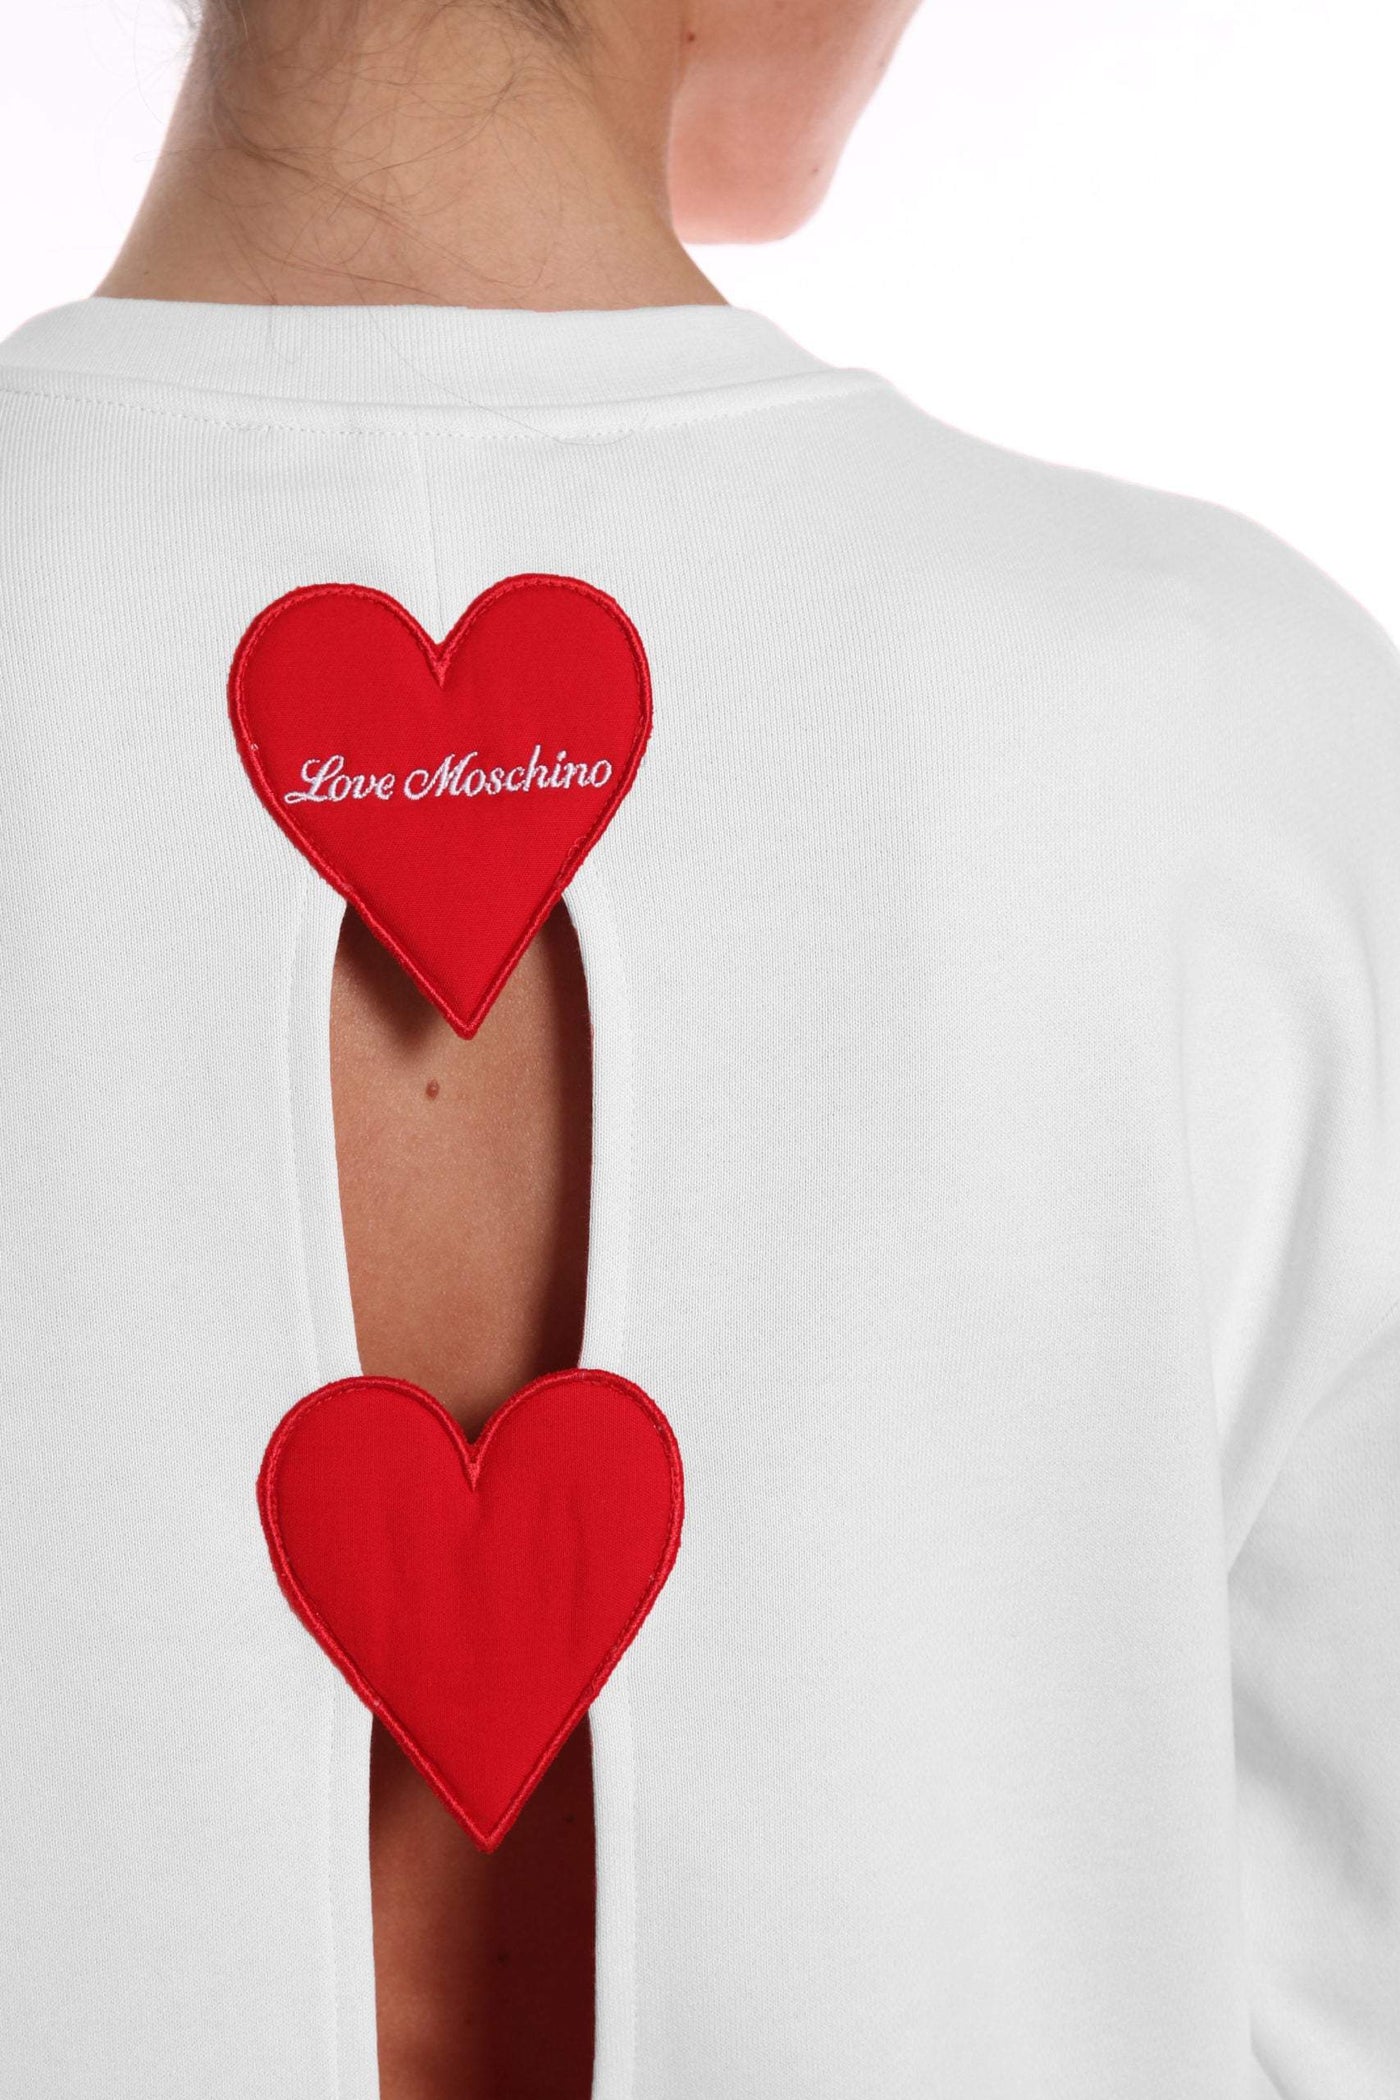 Love Moschino White Cotton Sweater feed-1, IT40|S, IT42|M, IT44|L, IT46 | L, IT48 | XL, Love Moschino, Sweaters - Women - Clothing, White at SEYMAYKA